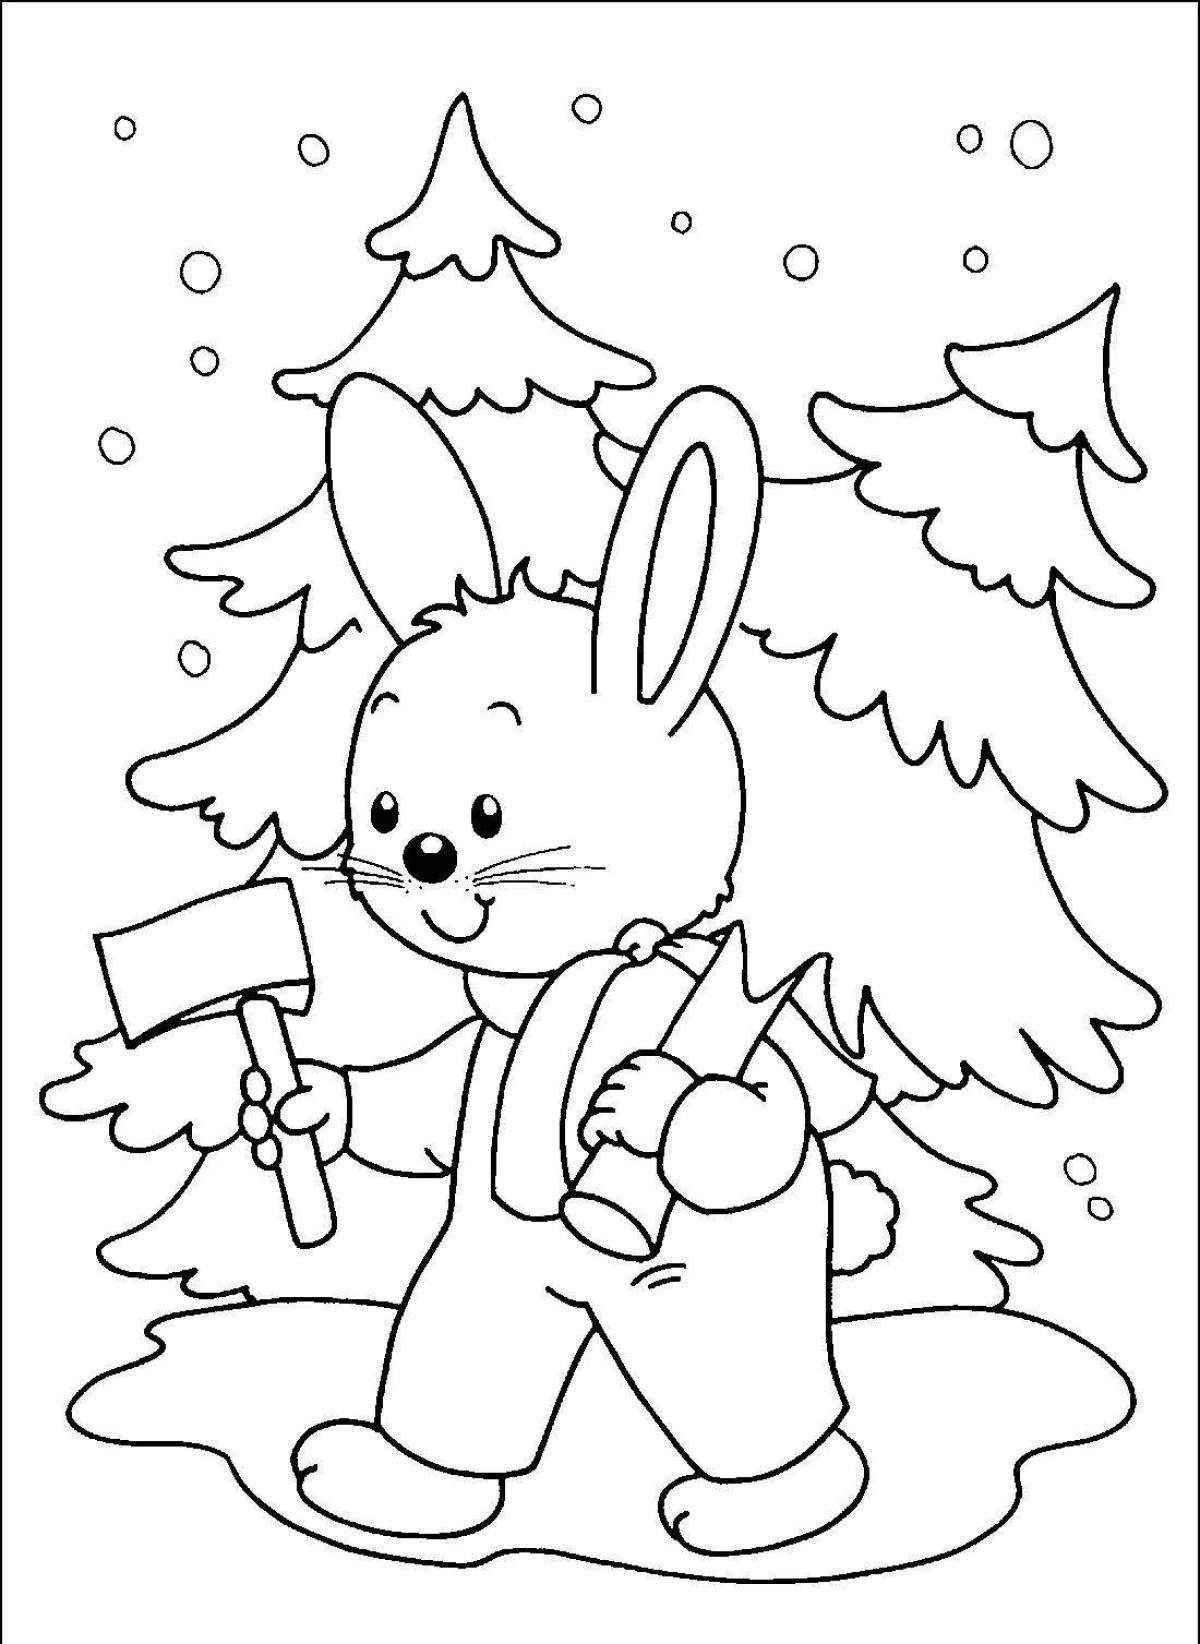 Playful winter rabbit coloring book